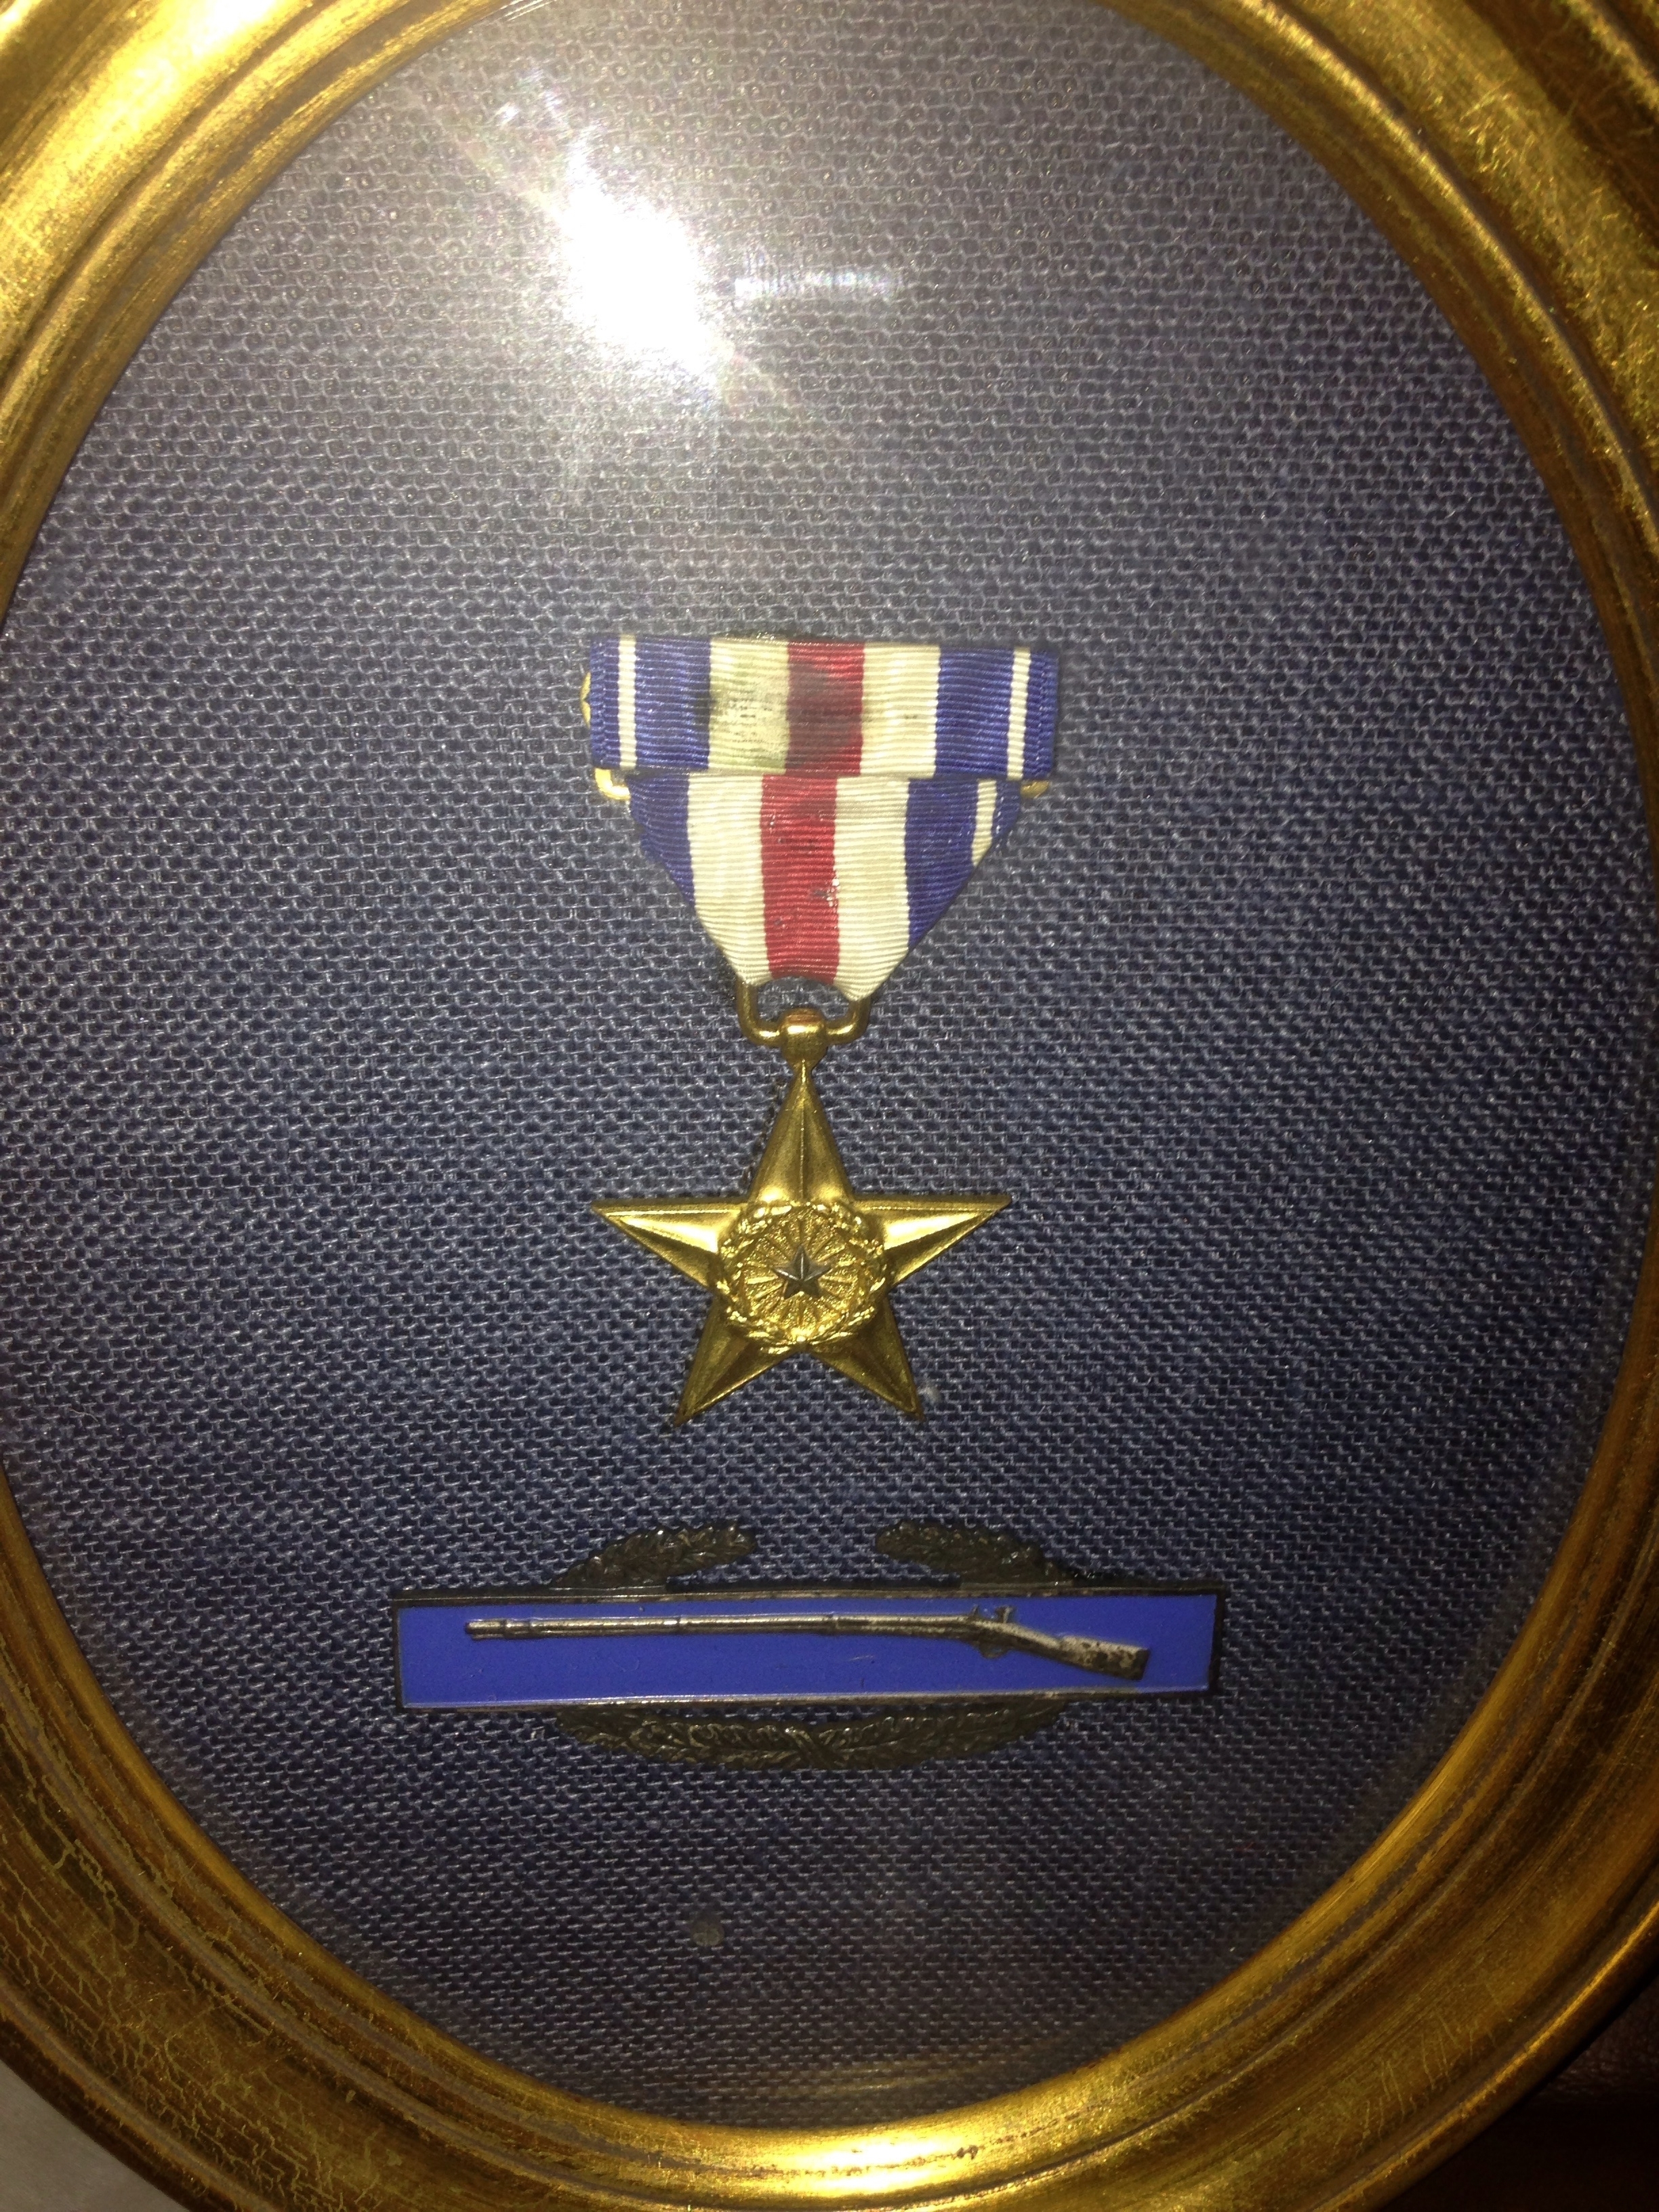 Joseph S Brofman medal